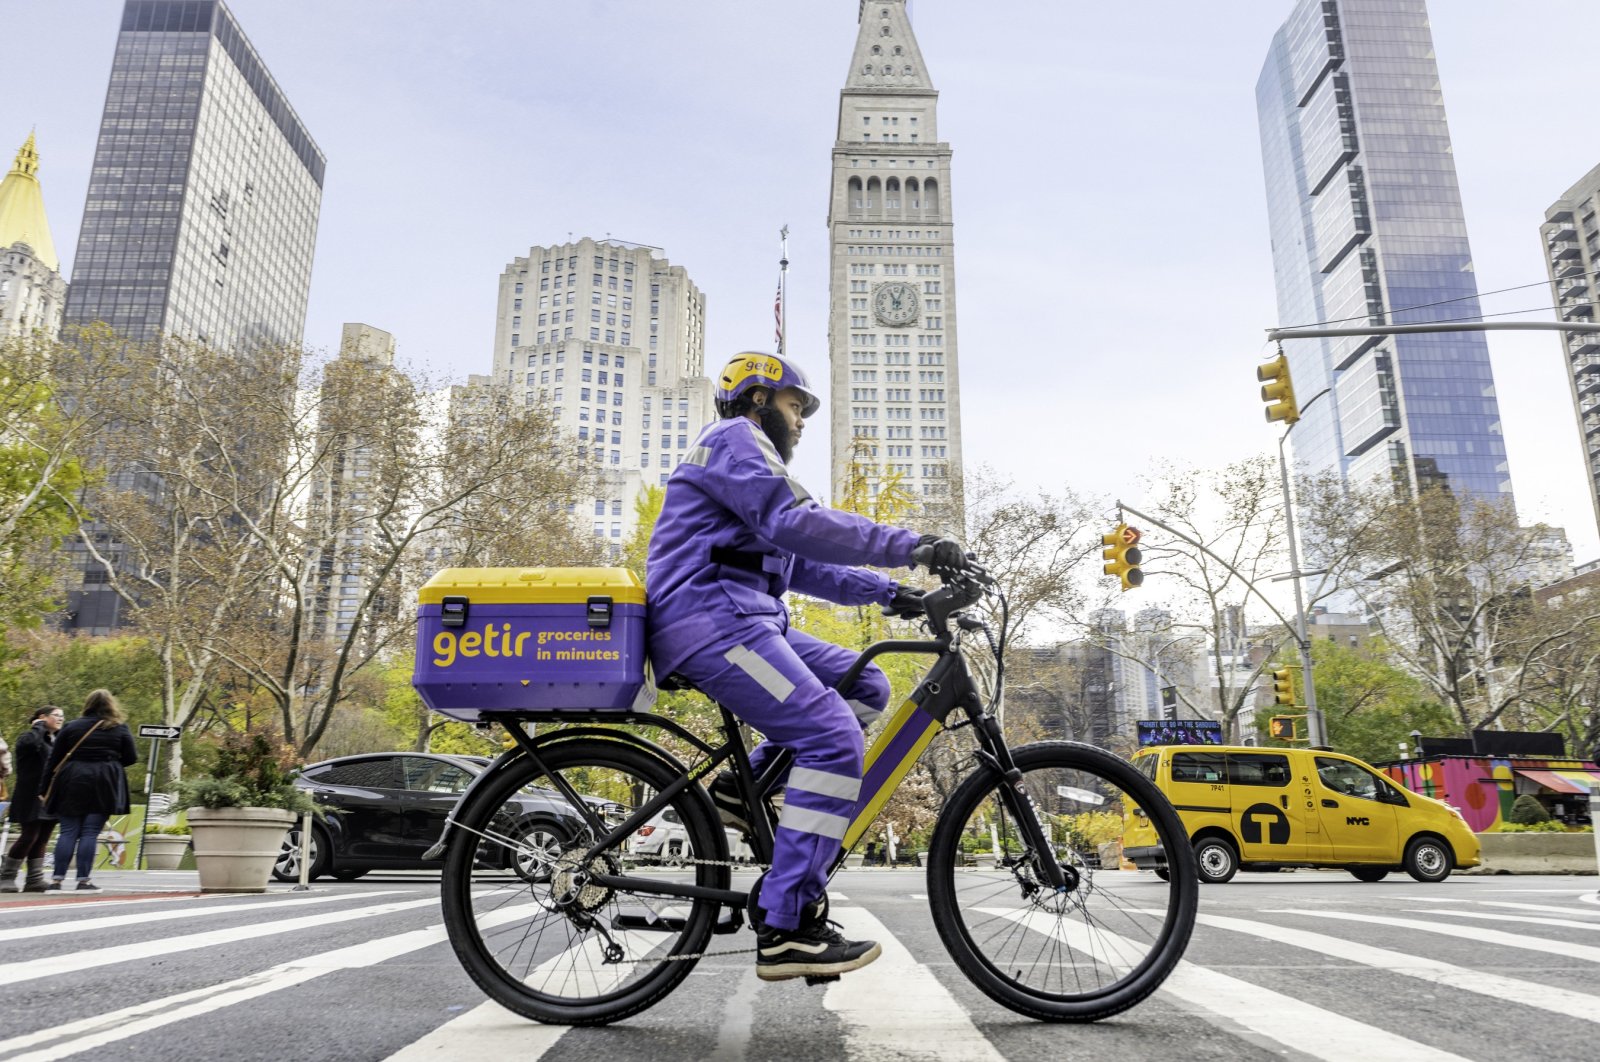 A Getir courier is seen on a street in New York, U.S., Dec. 8, 2021. (Courtesy of Getir)